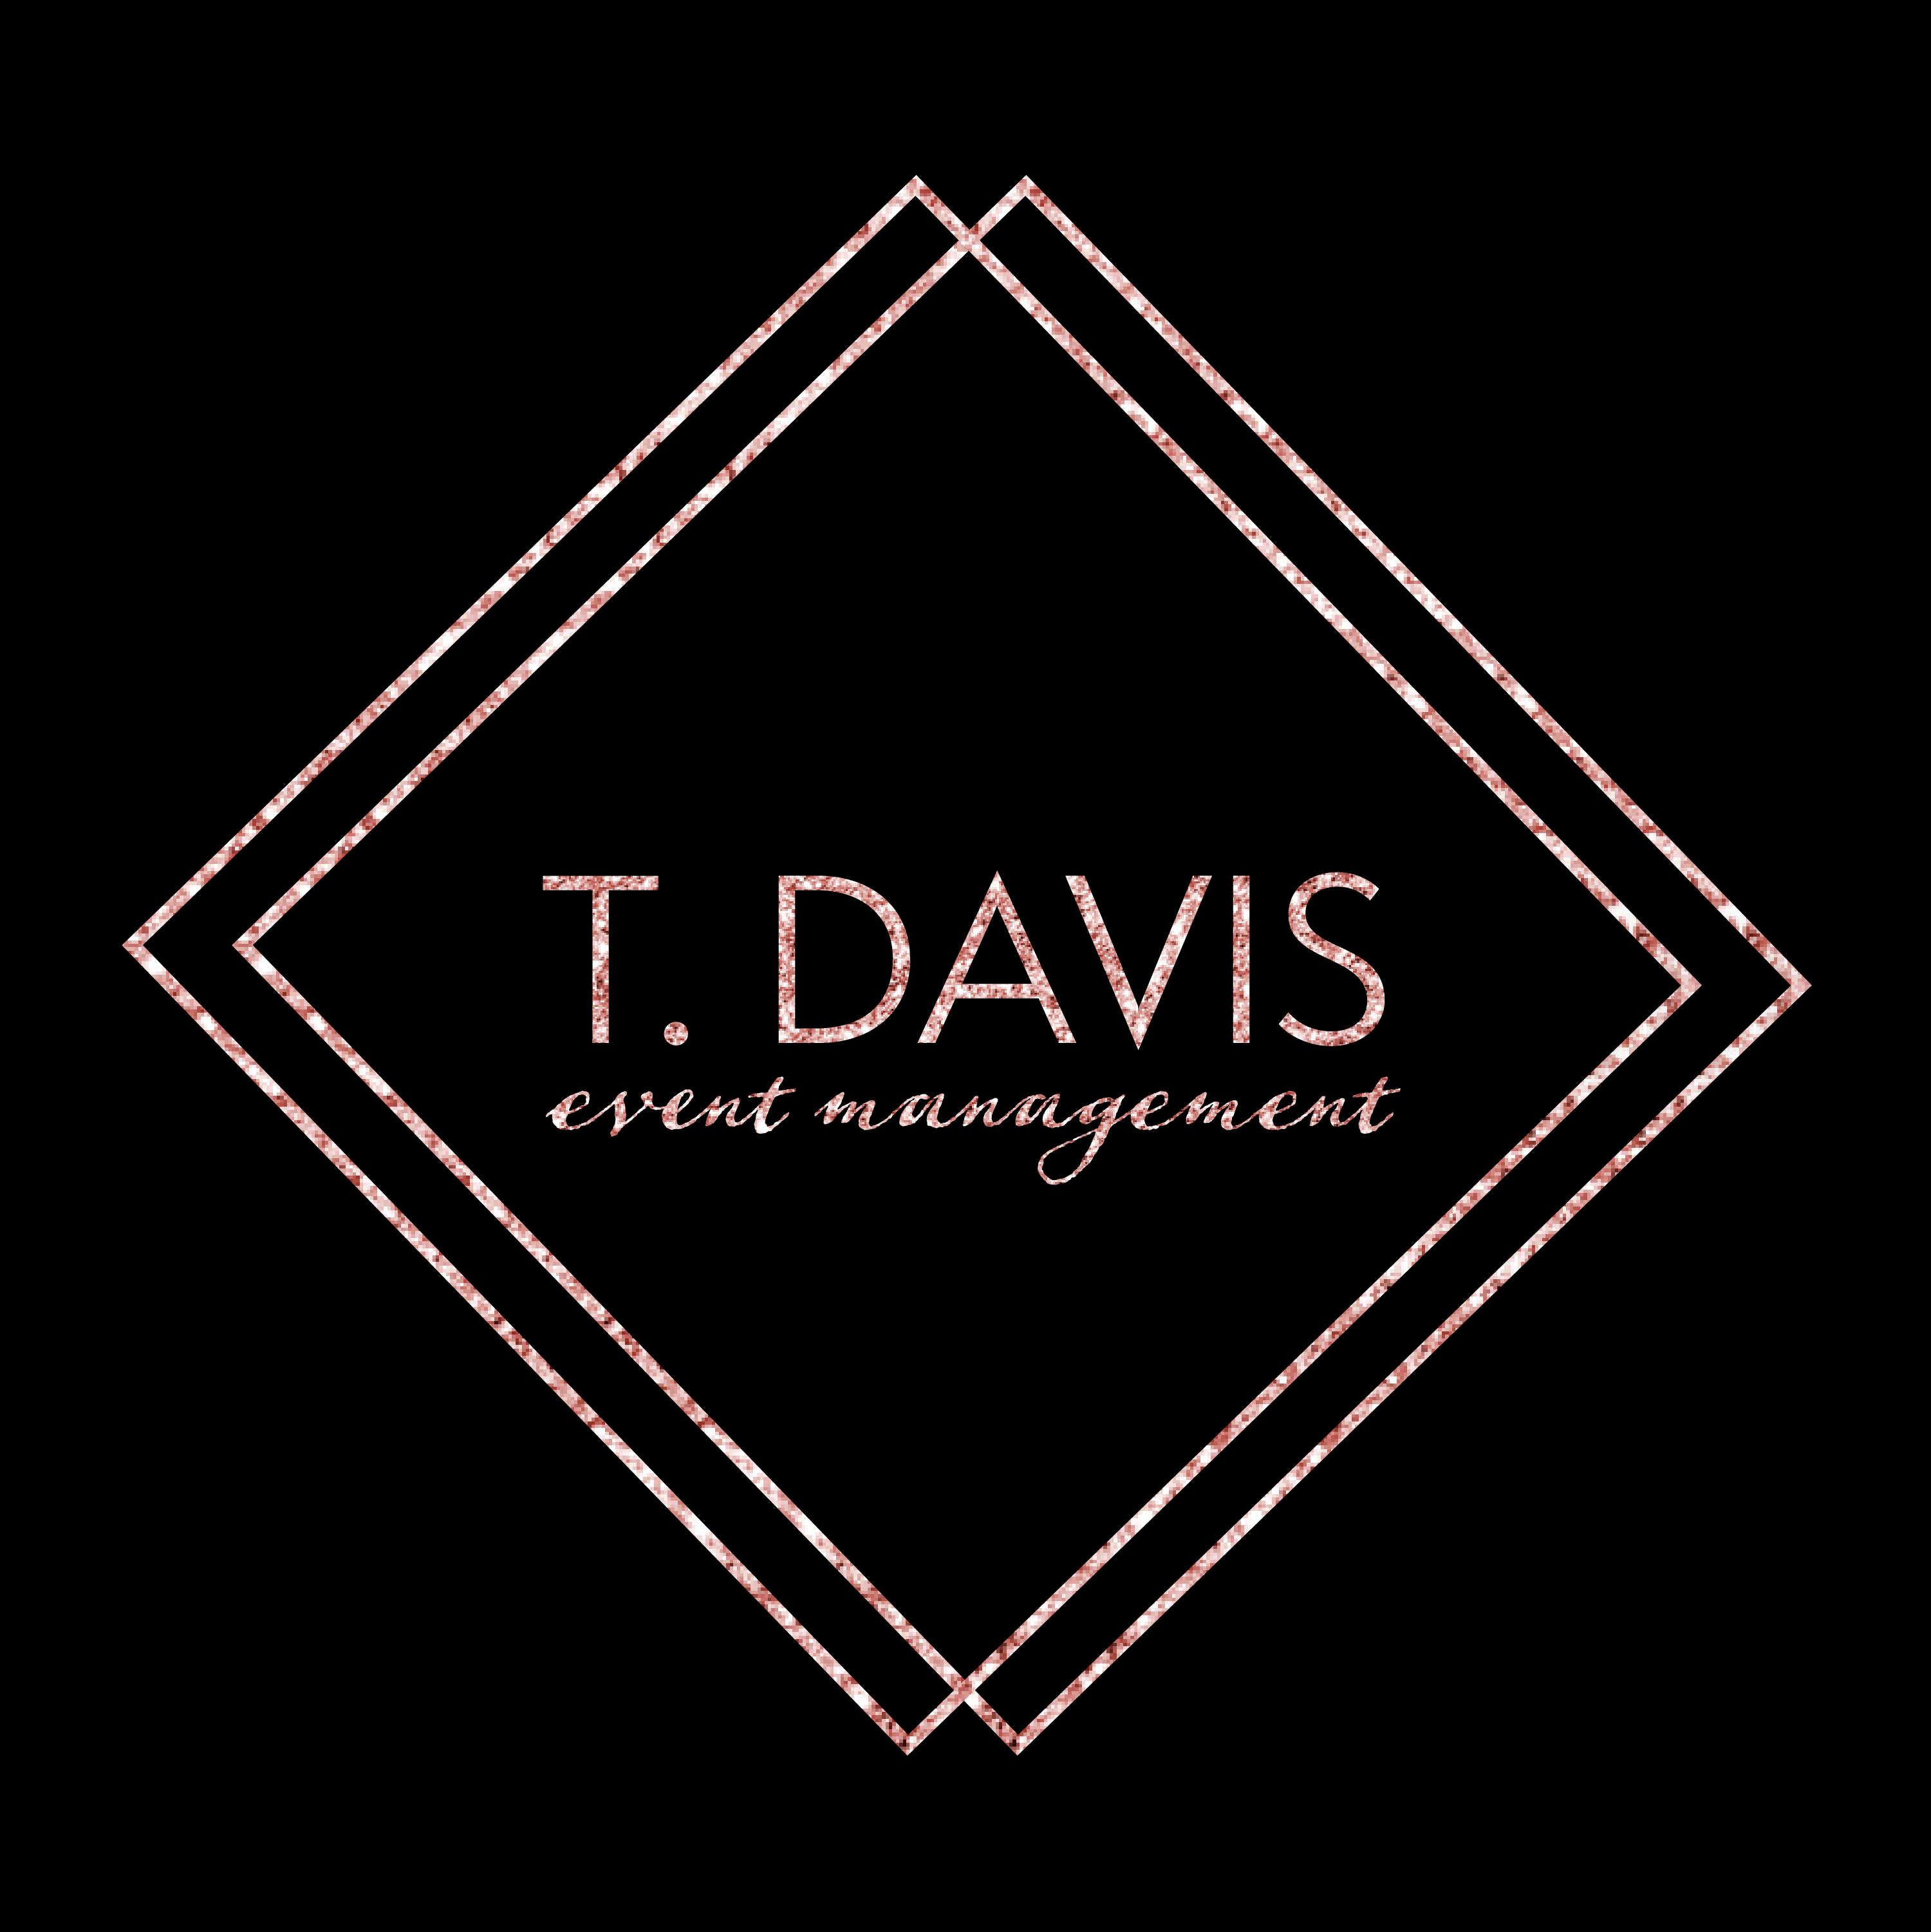 T. Davis Event Management